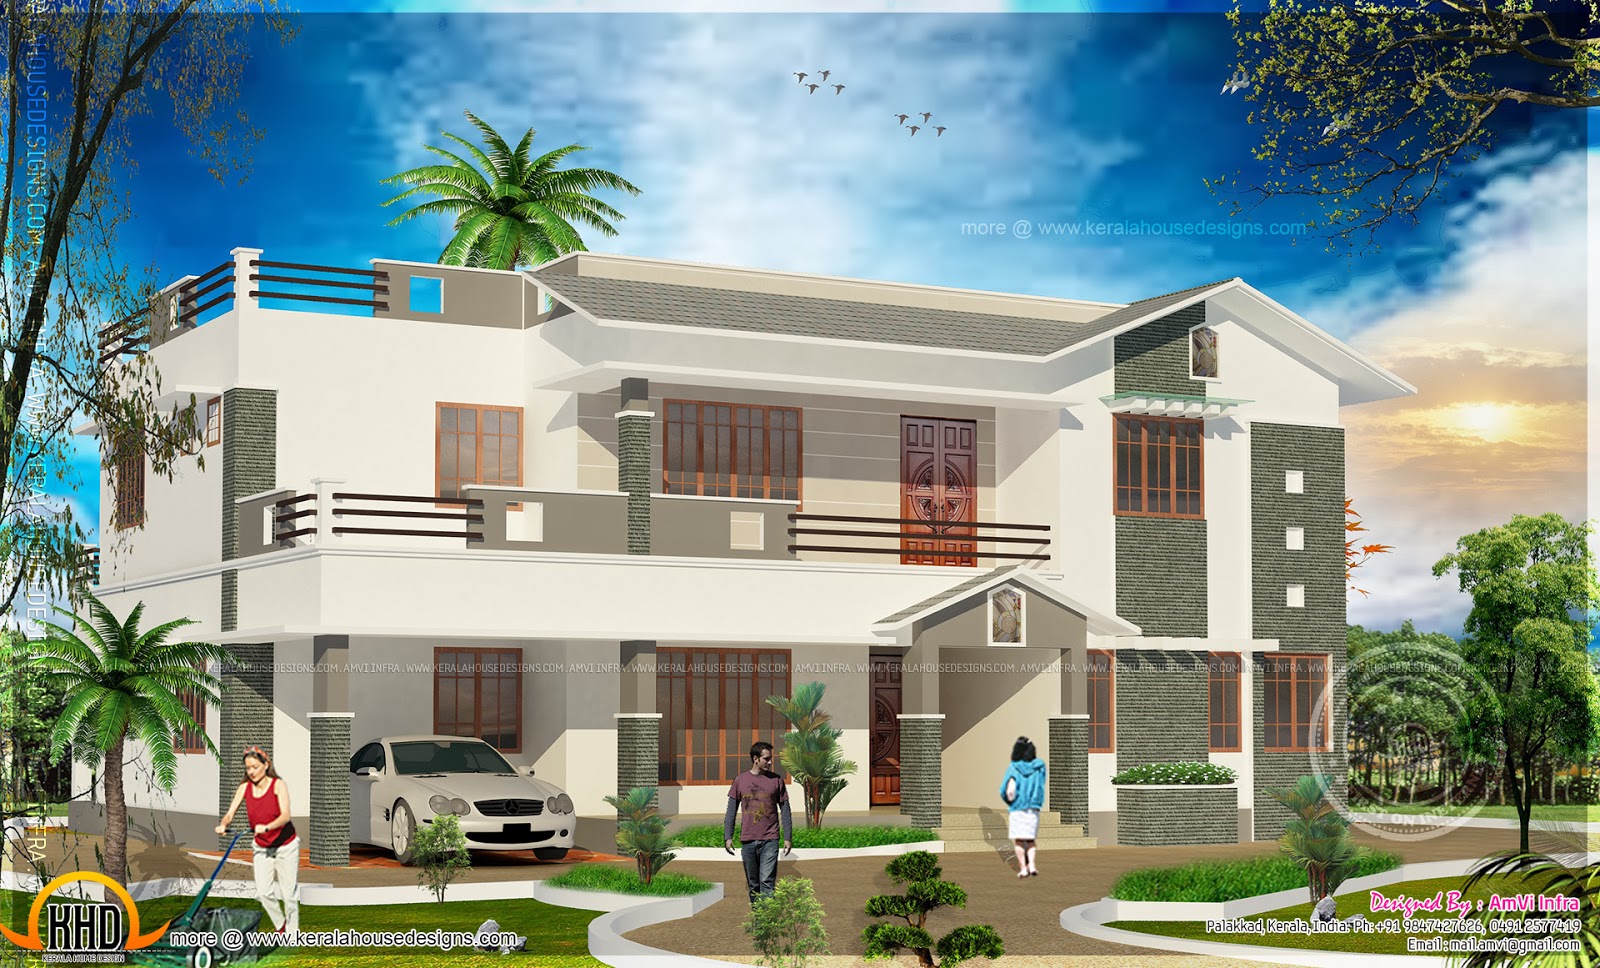  5  bedroom  house  elevation with floor plan  Kerala  home  